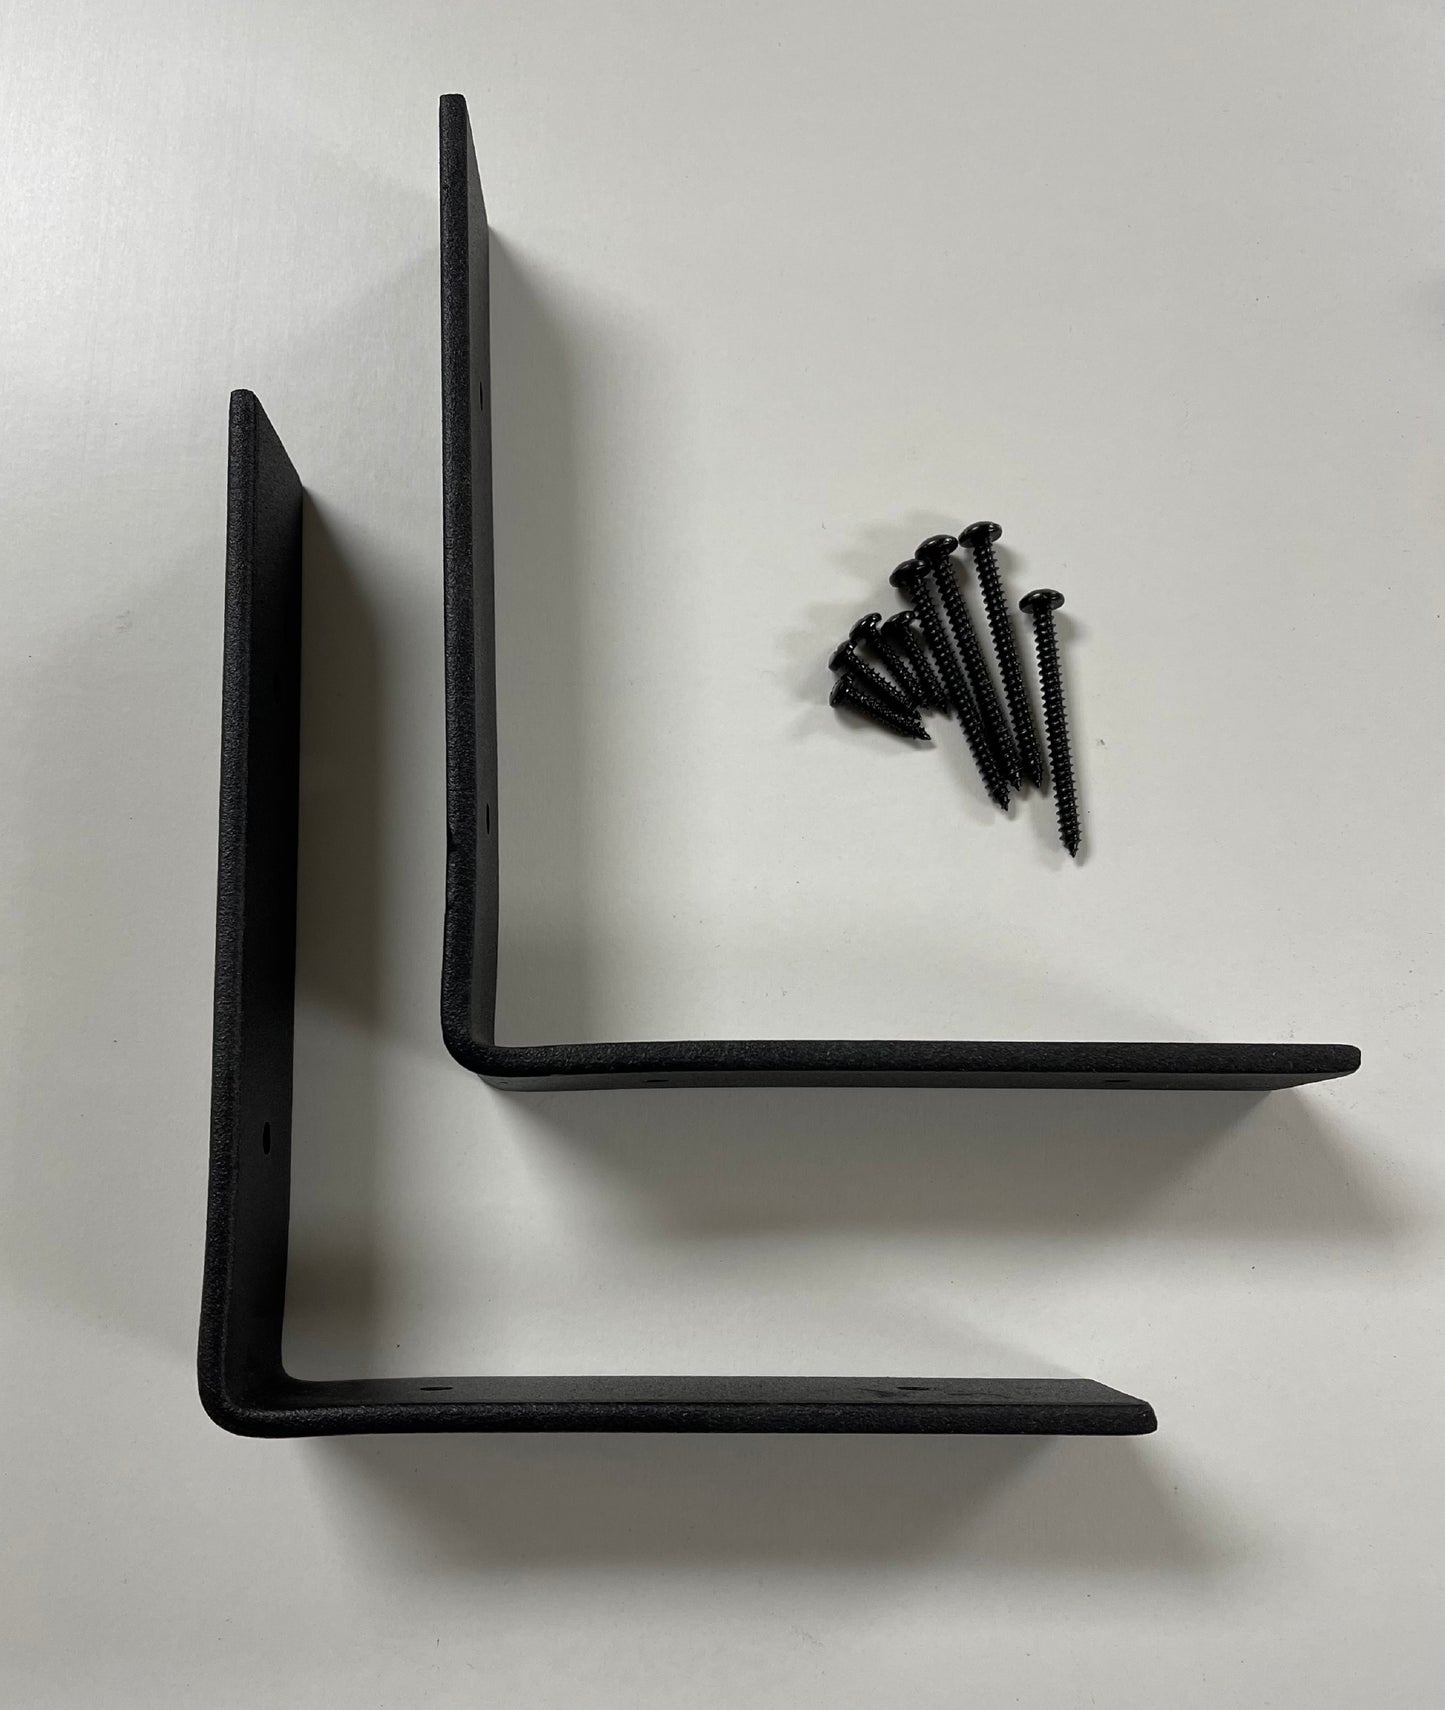 Premium American Black Walnut Industrial Style Shelf with Flat Style Brackets, 40-45mm (2 Inch) Depth